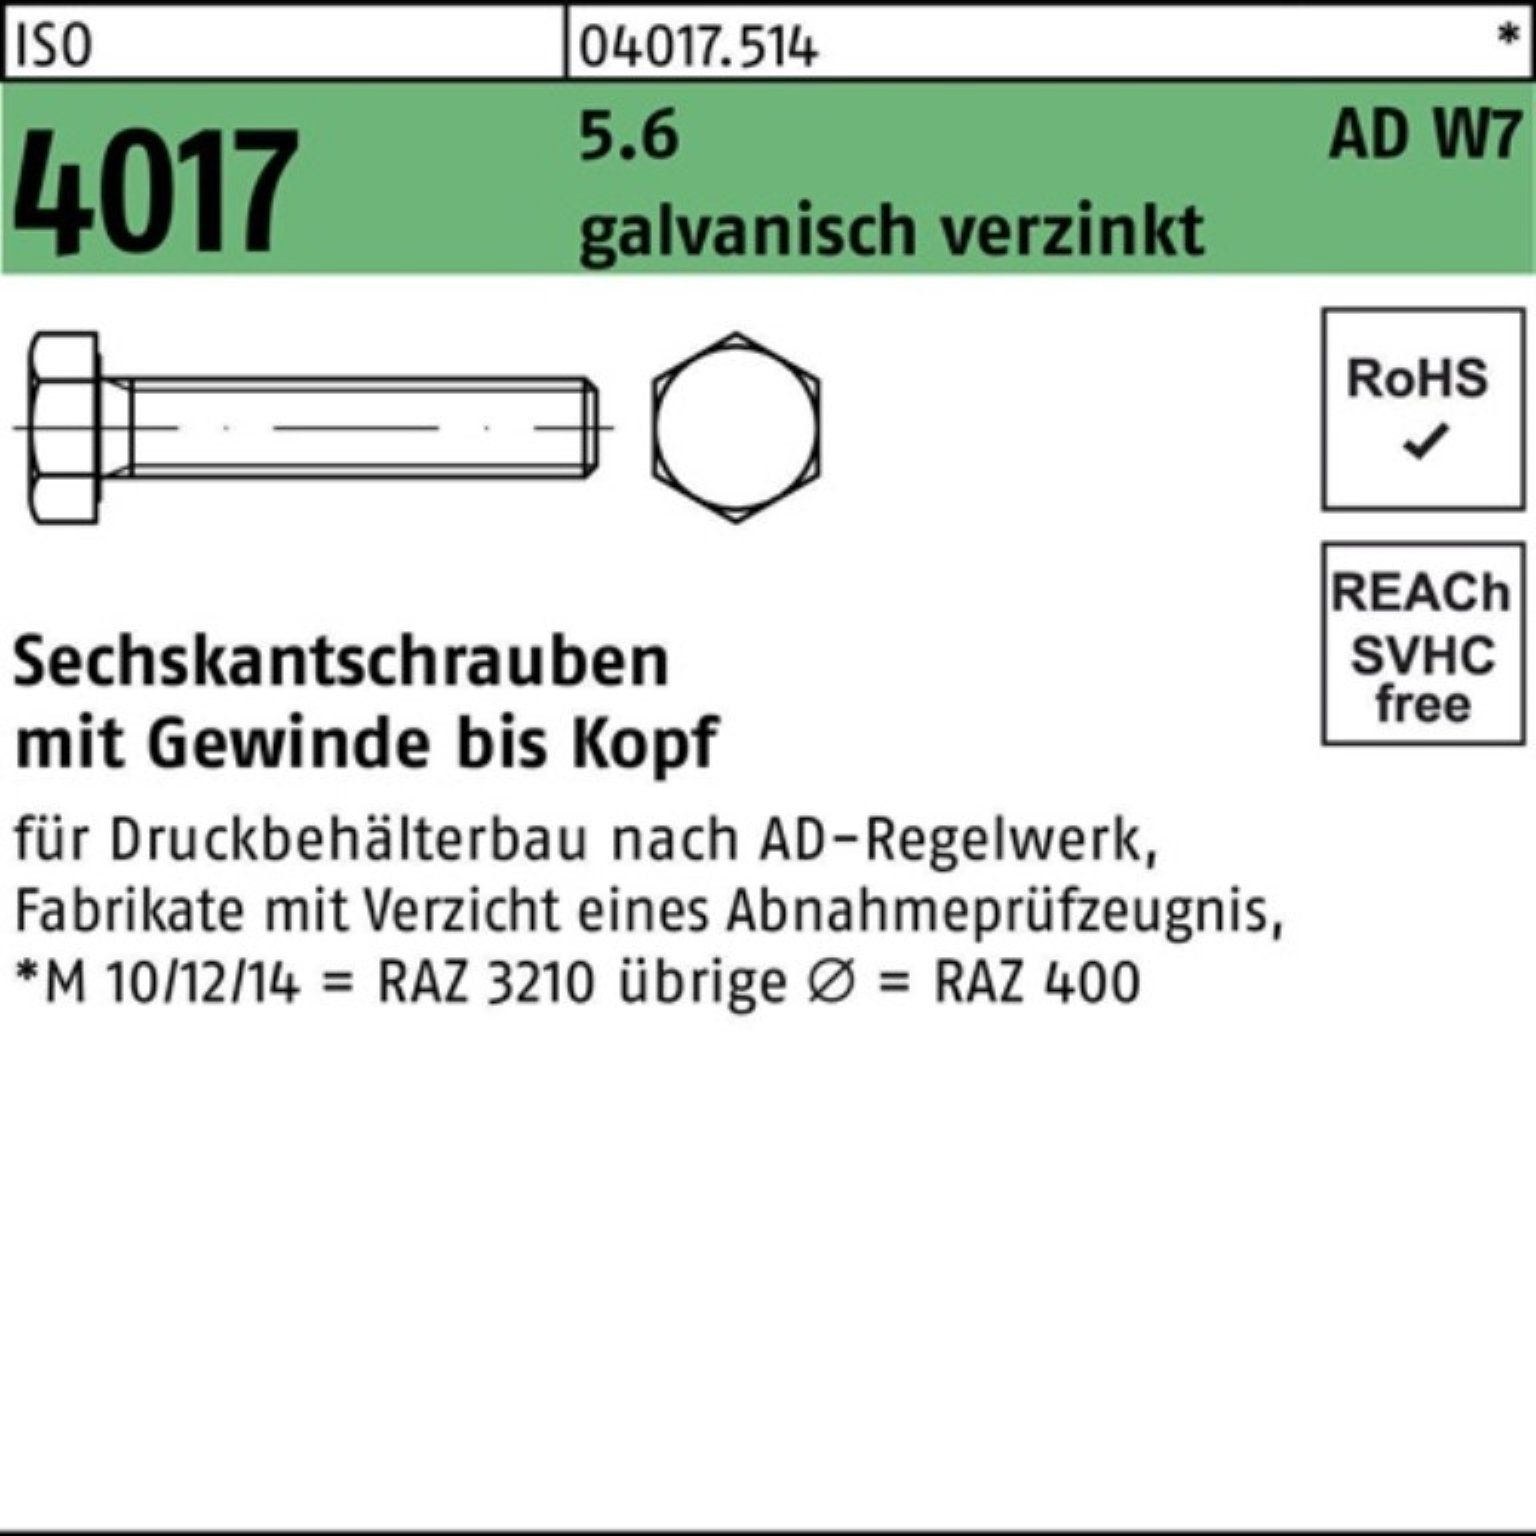 Bufab Sechskantschraube 5.6 M12x ISO VG galv.verz. 100er 30 Sechskantschraube W7 AD Pack 4017